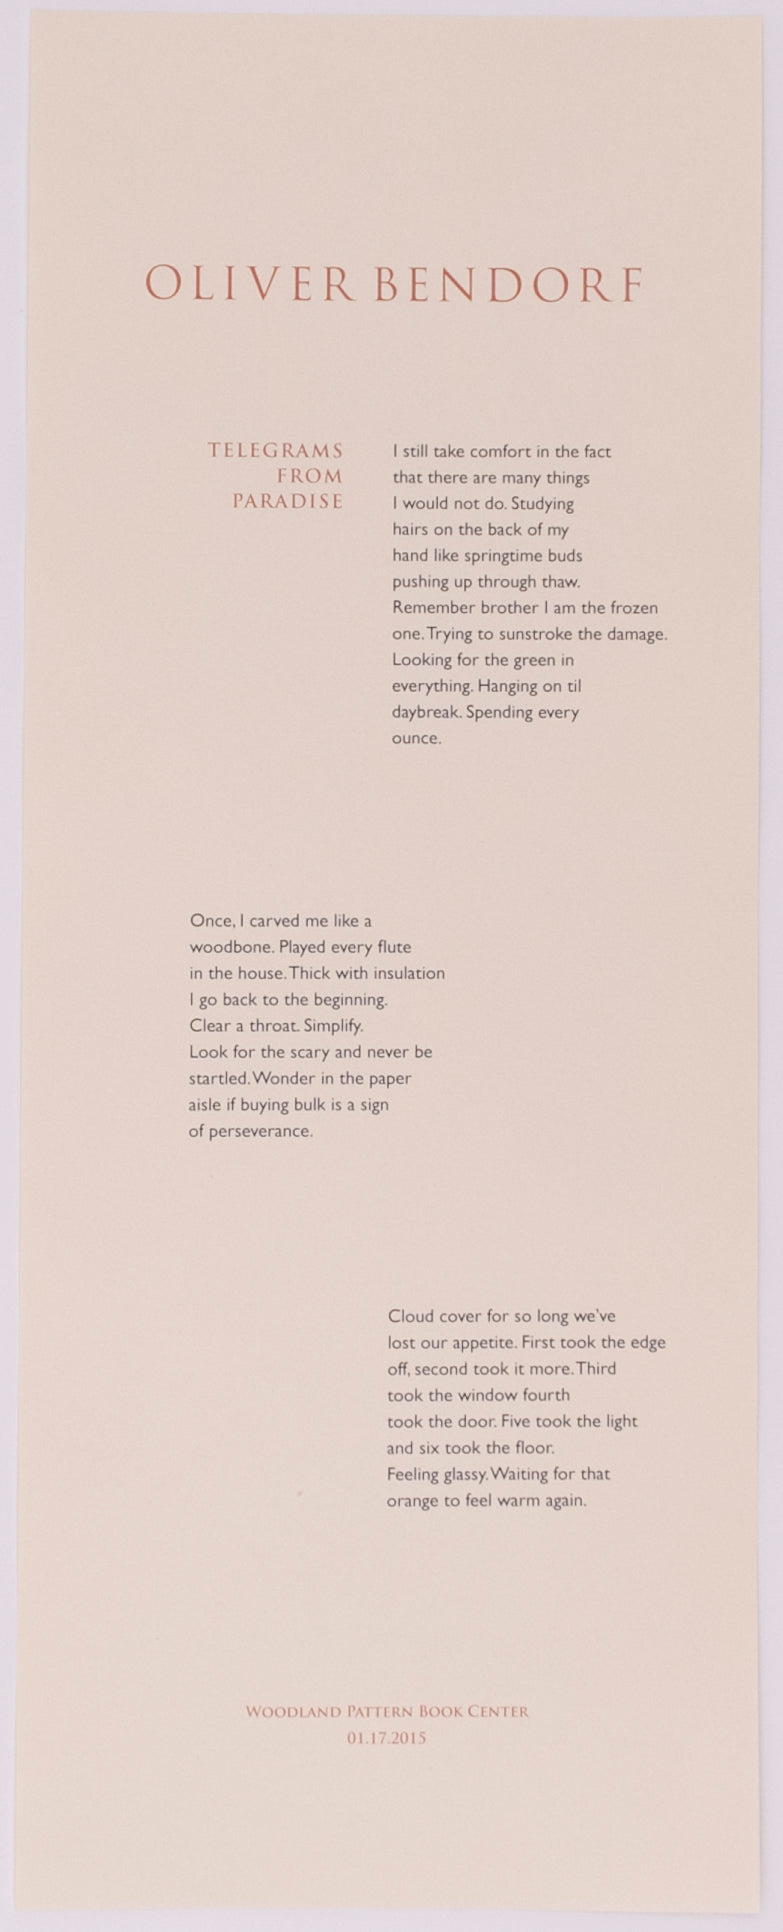 Broadside titled Telegrams form paradise by Oliver Baez Bendorf. Orange and black text on cream paper.